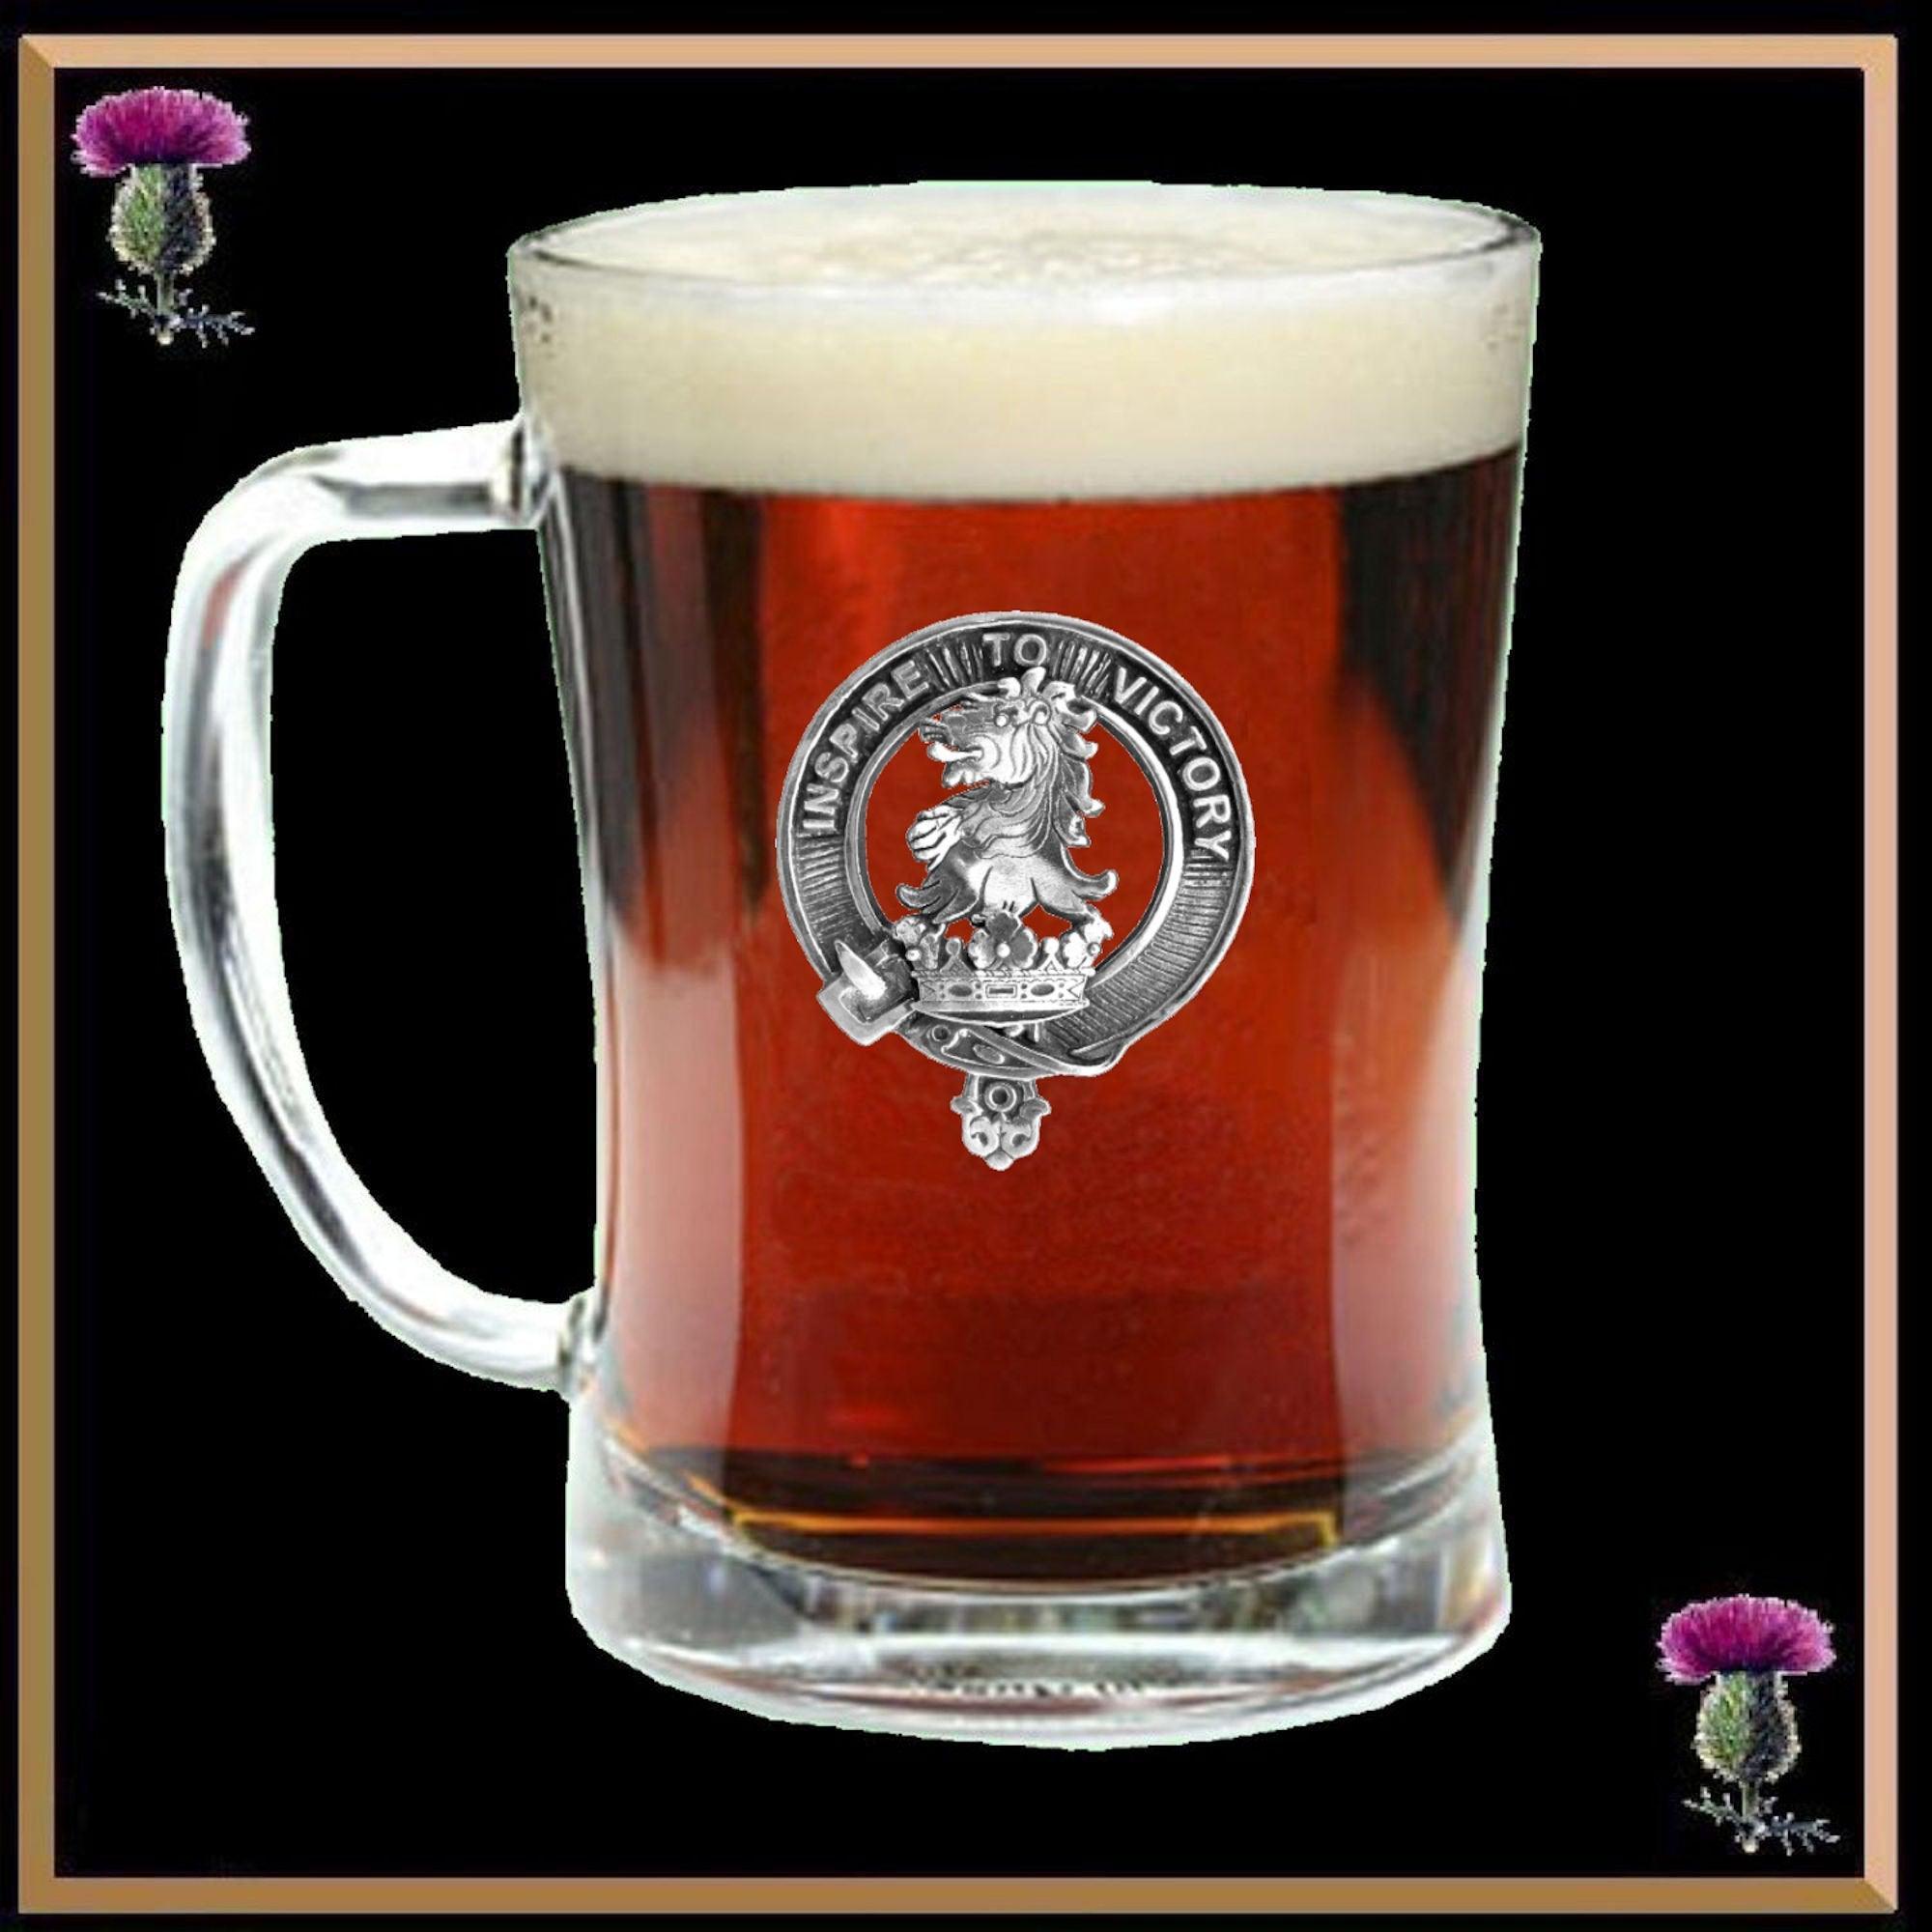 Currie Clan Crest Badge Glass Beer Mug